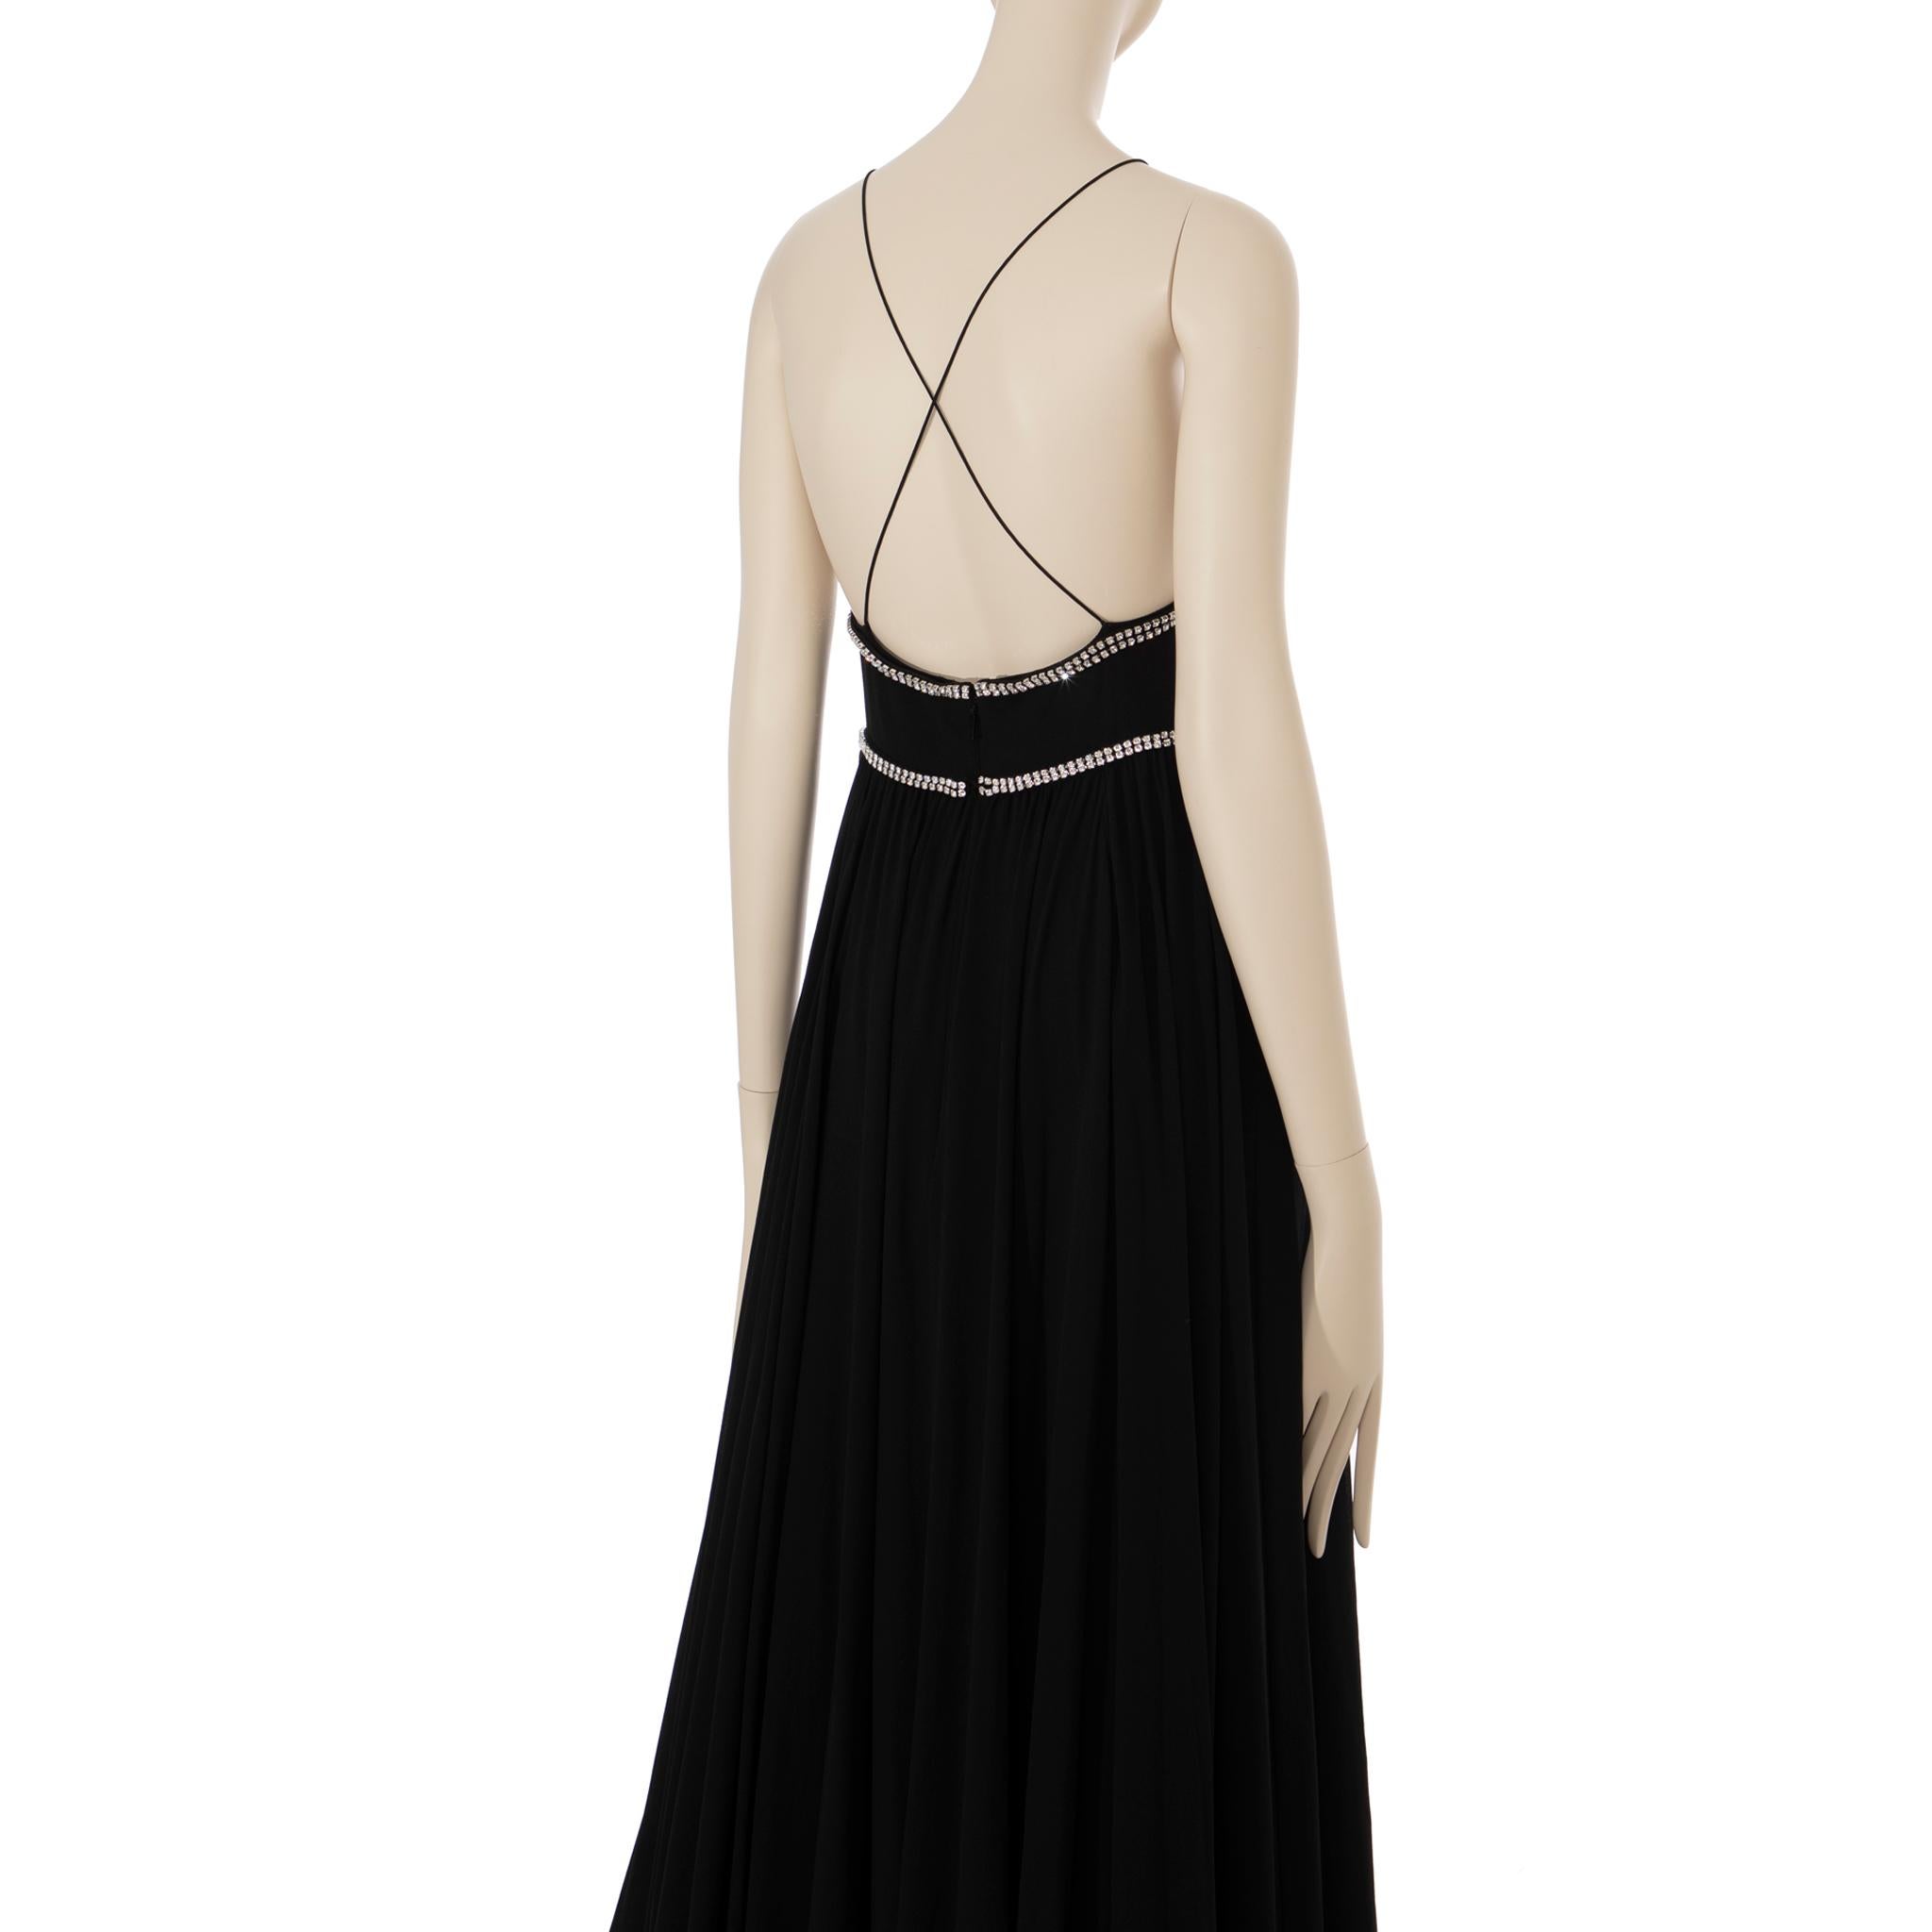 Saint Laurent Black Evening Gown With Crystal Details 38 FR For Sale 4